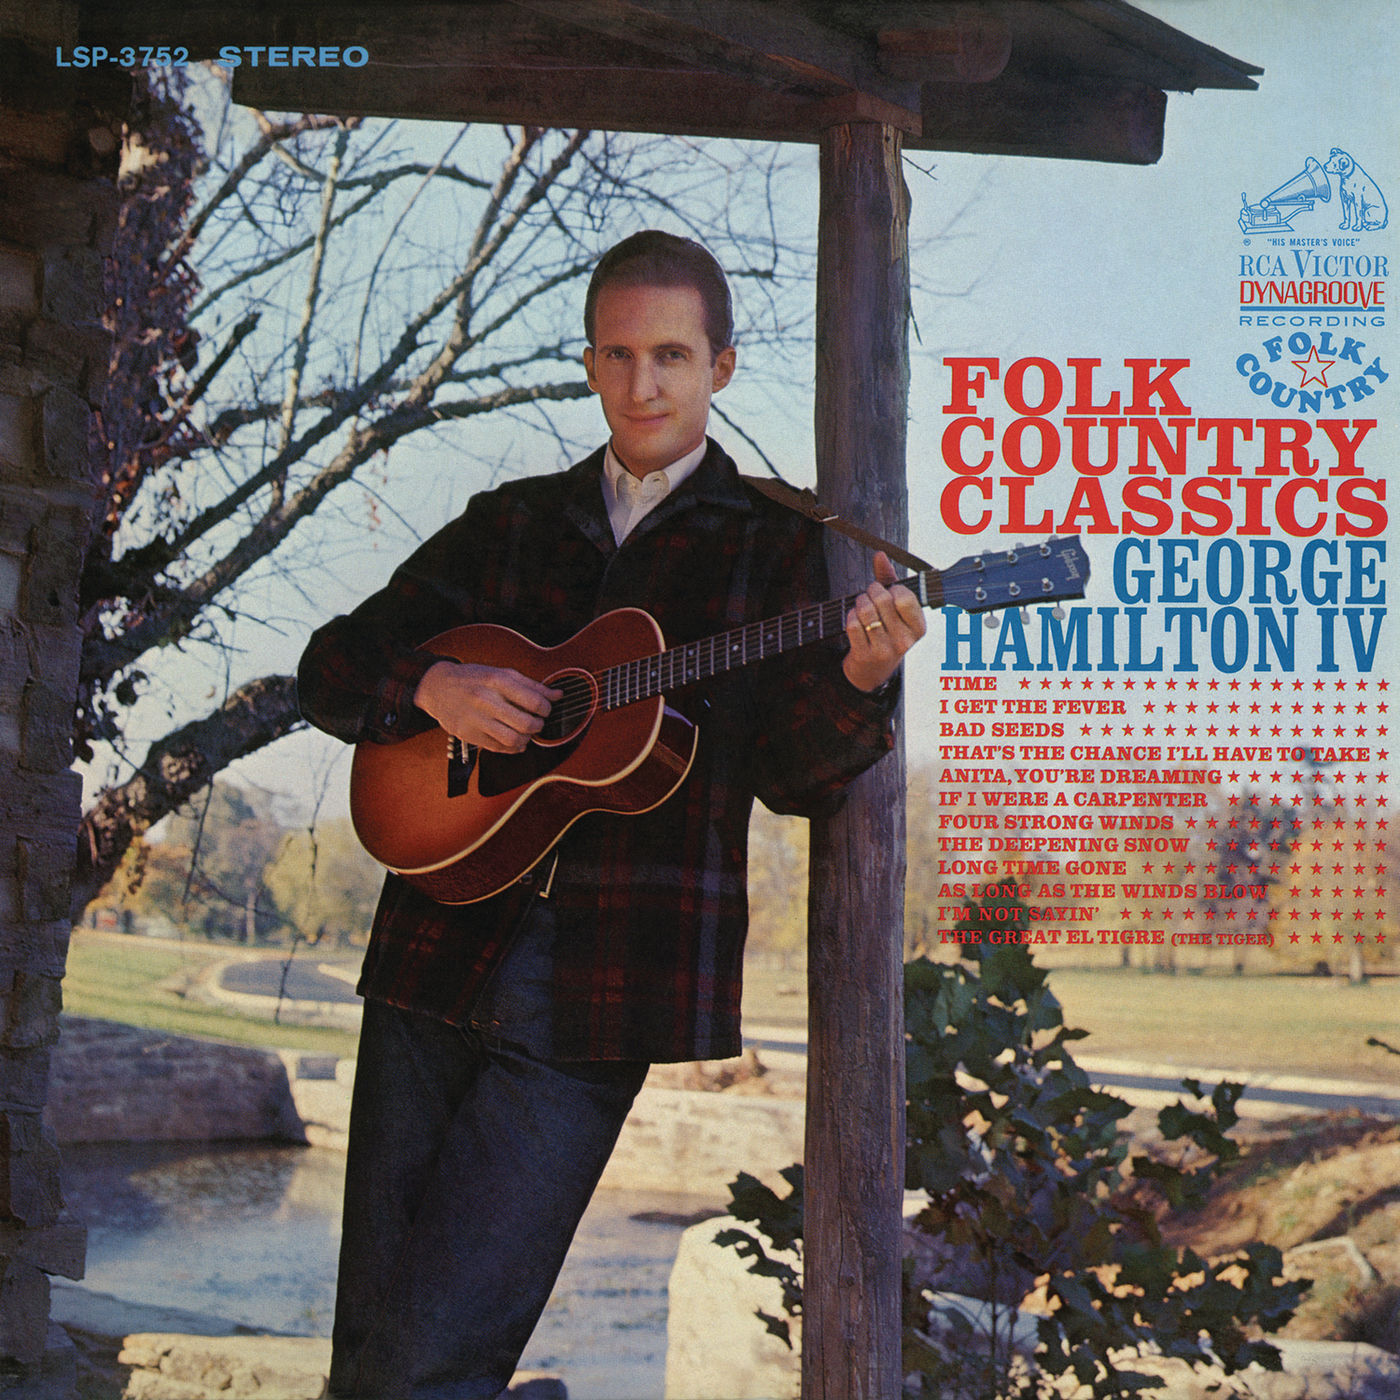 George Hamilton IV – Folk Country Classics